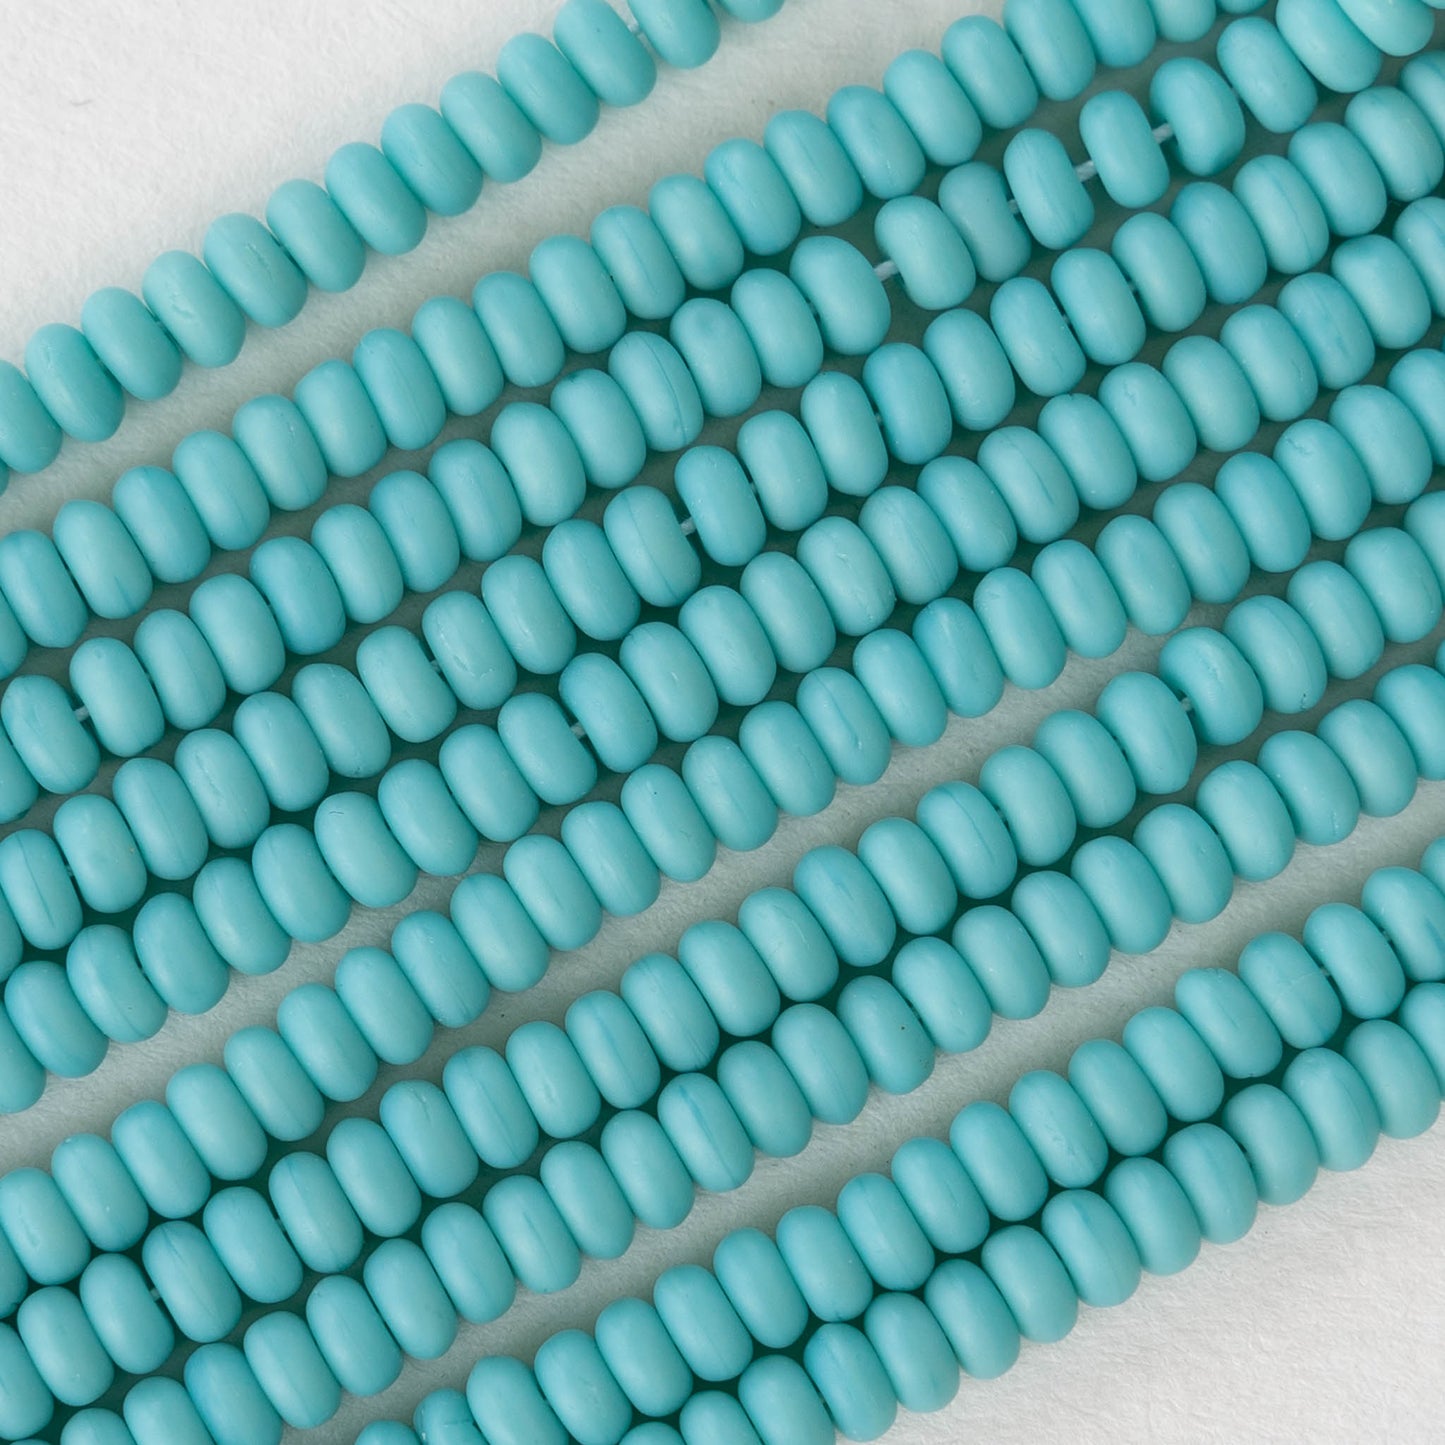 4mm Rondelle Beads - Lt. Blue Turquoise Matte - 100 Beads